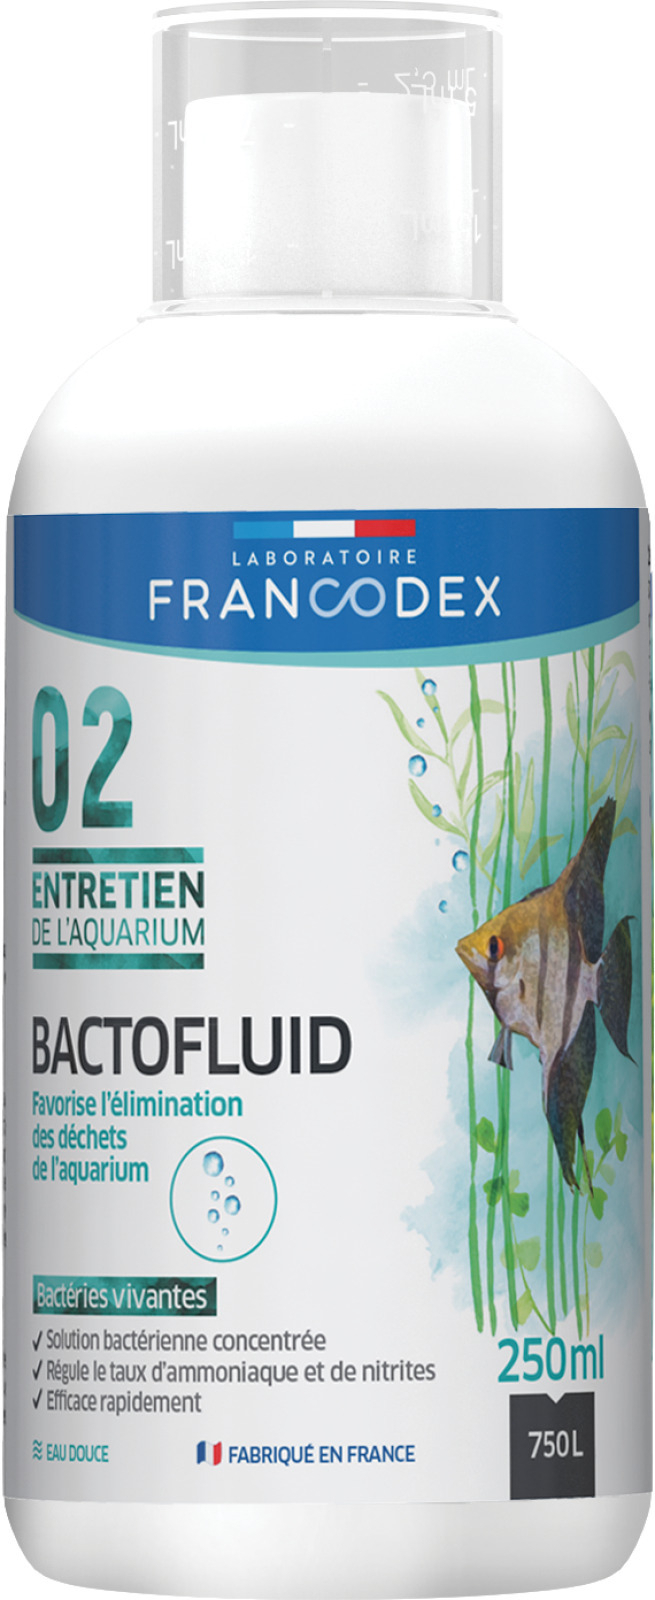 Bactofluid pulizia dell'acquario FRANCODEX